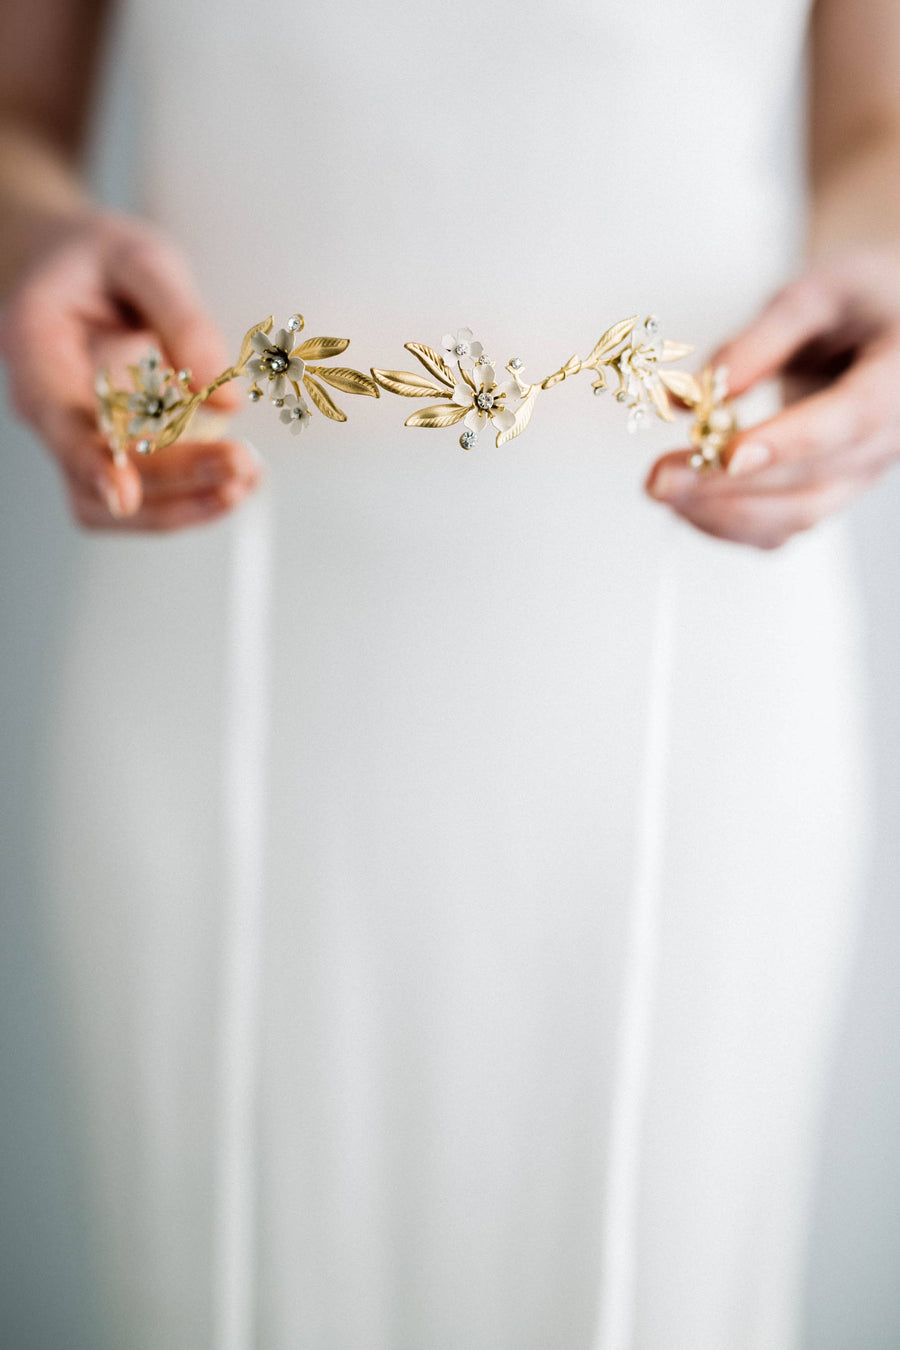 Bride wearing a gold tiara under a veil